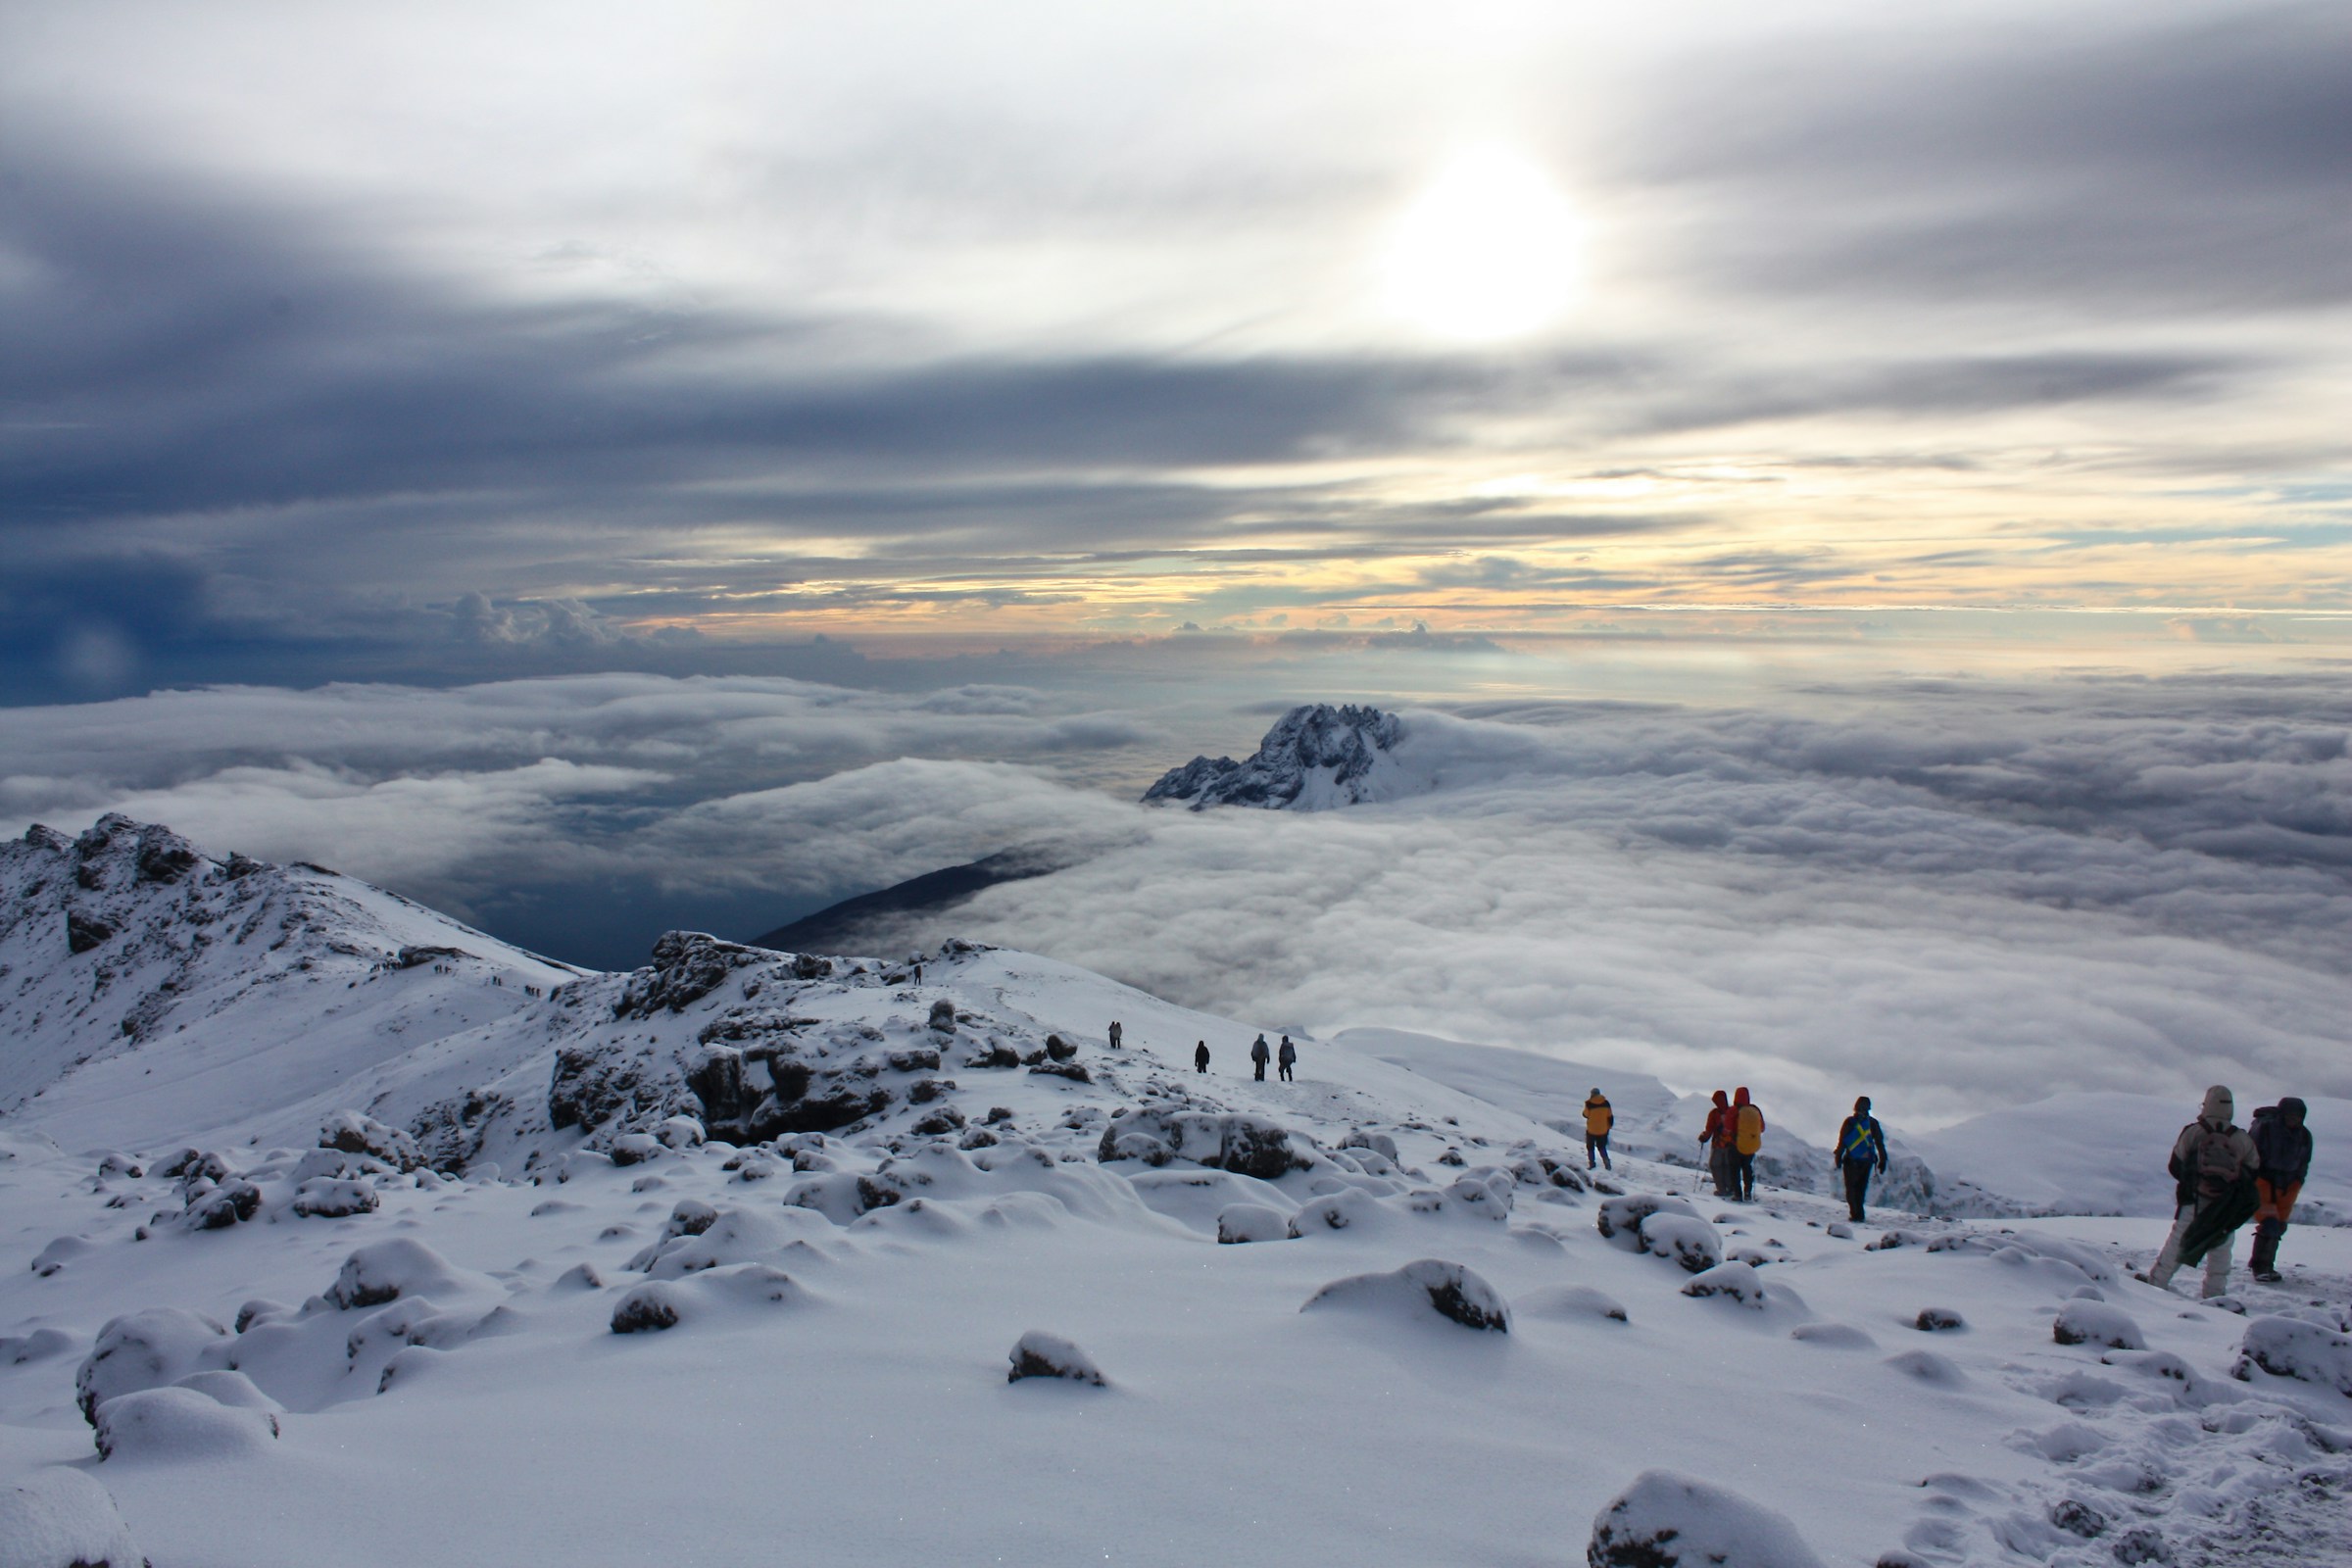 Kilimanjaro Trekking Tours